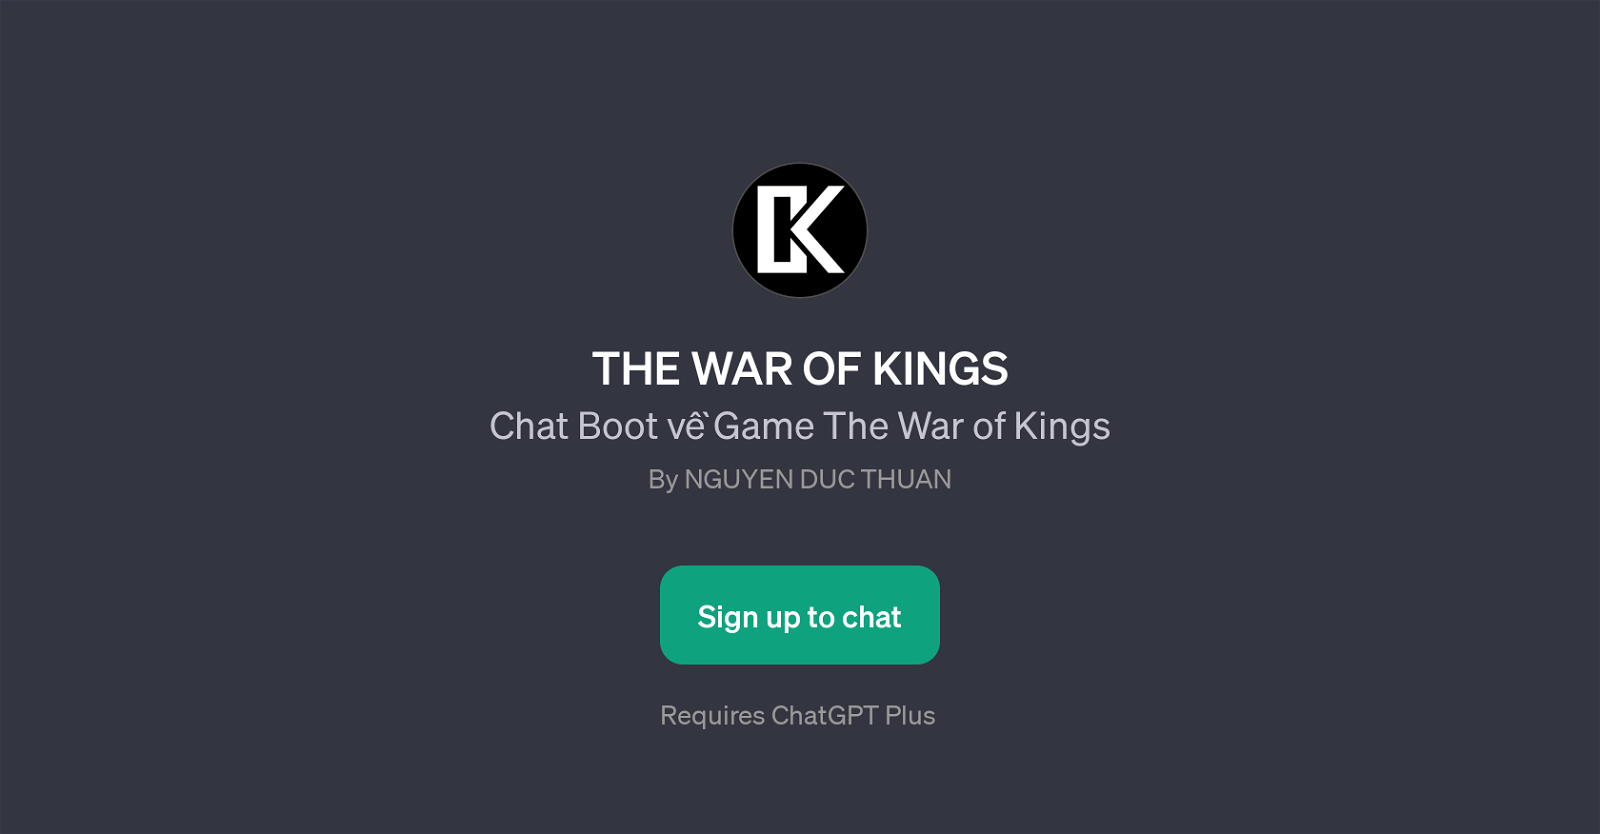 THE WAR OF KINGS website